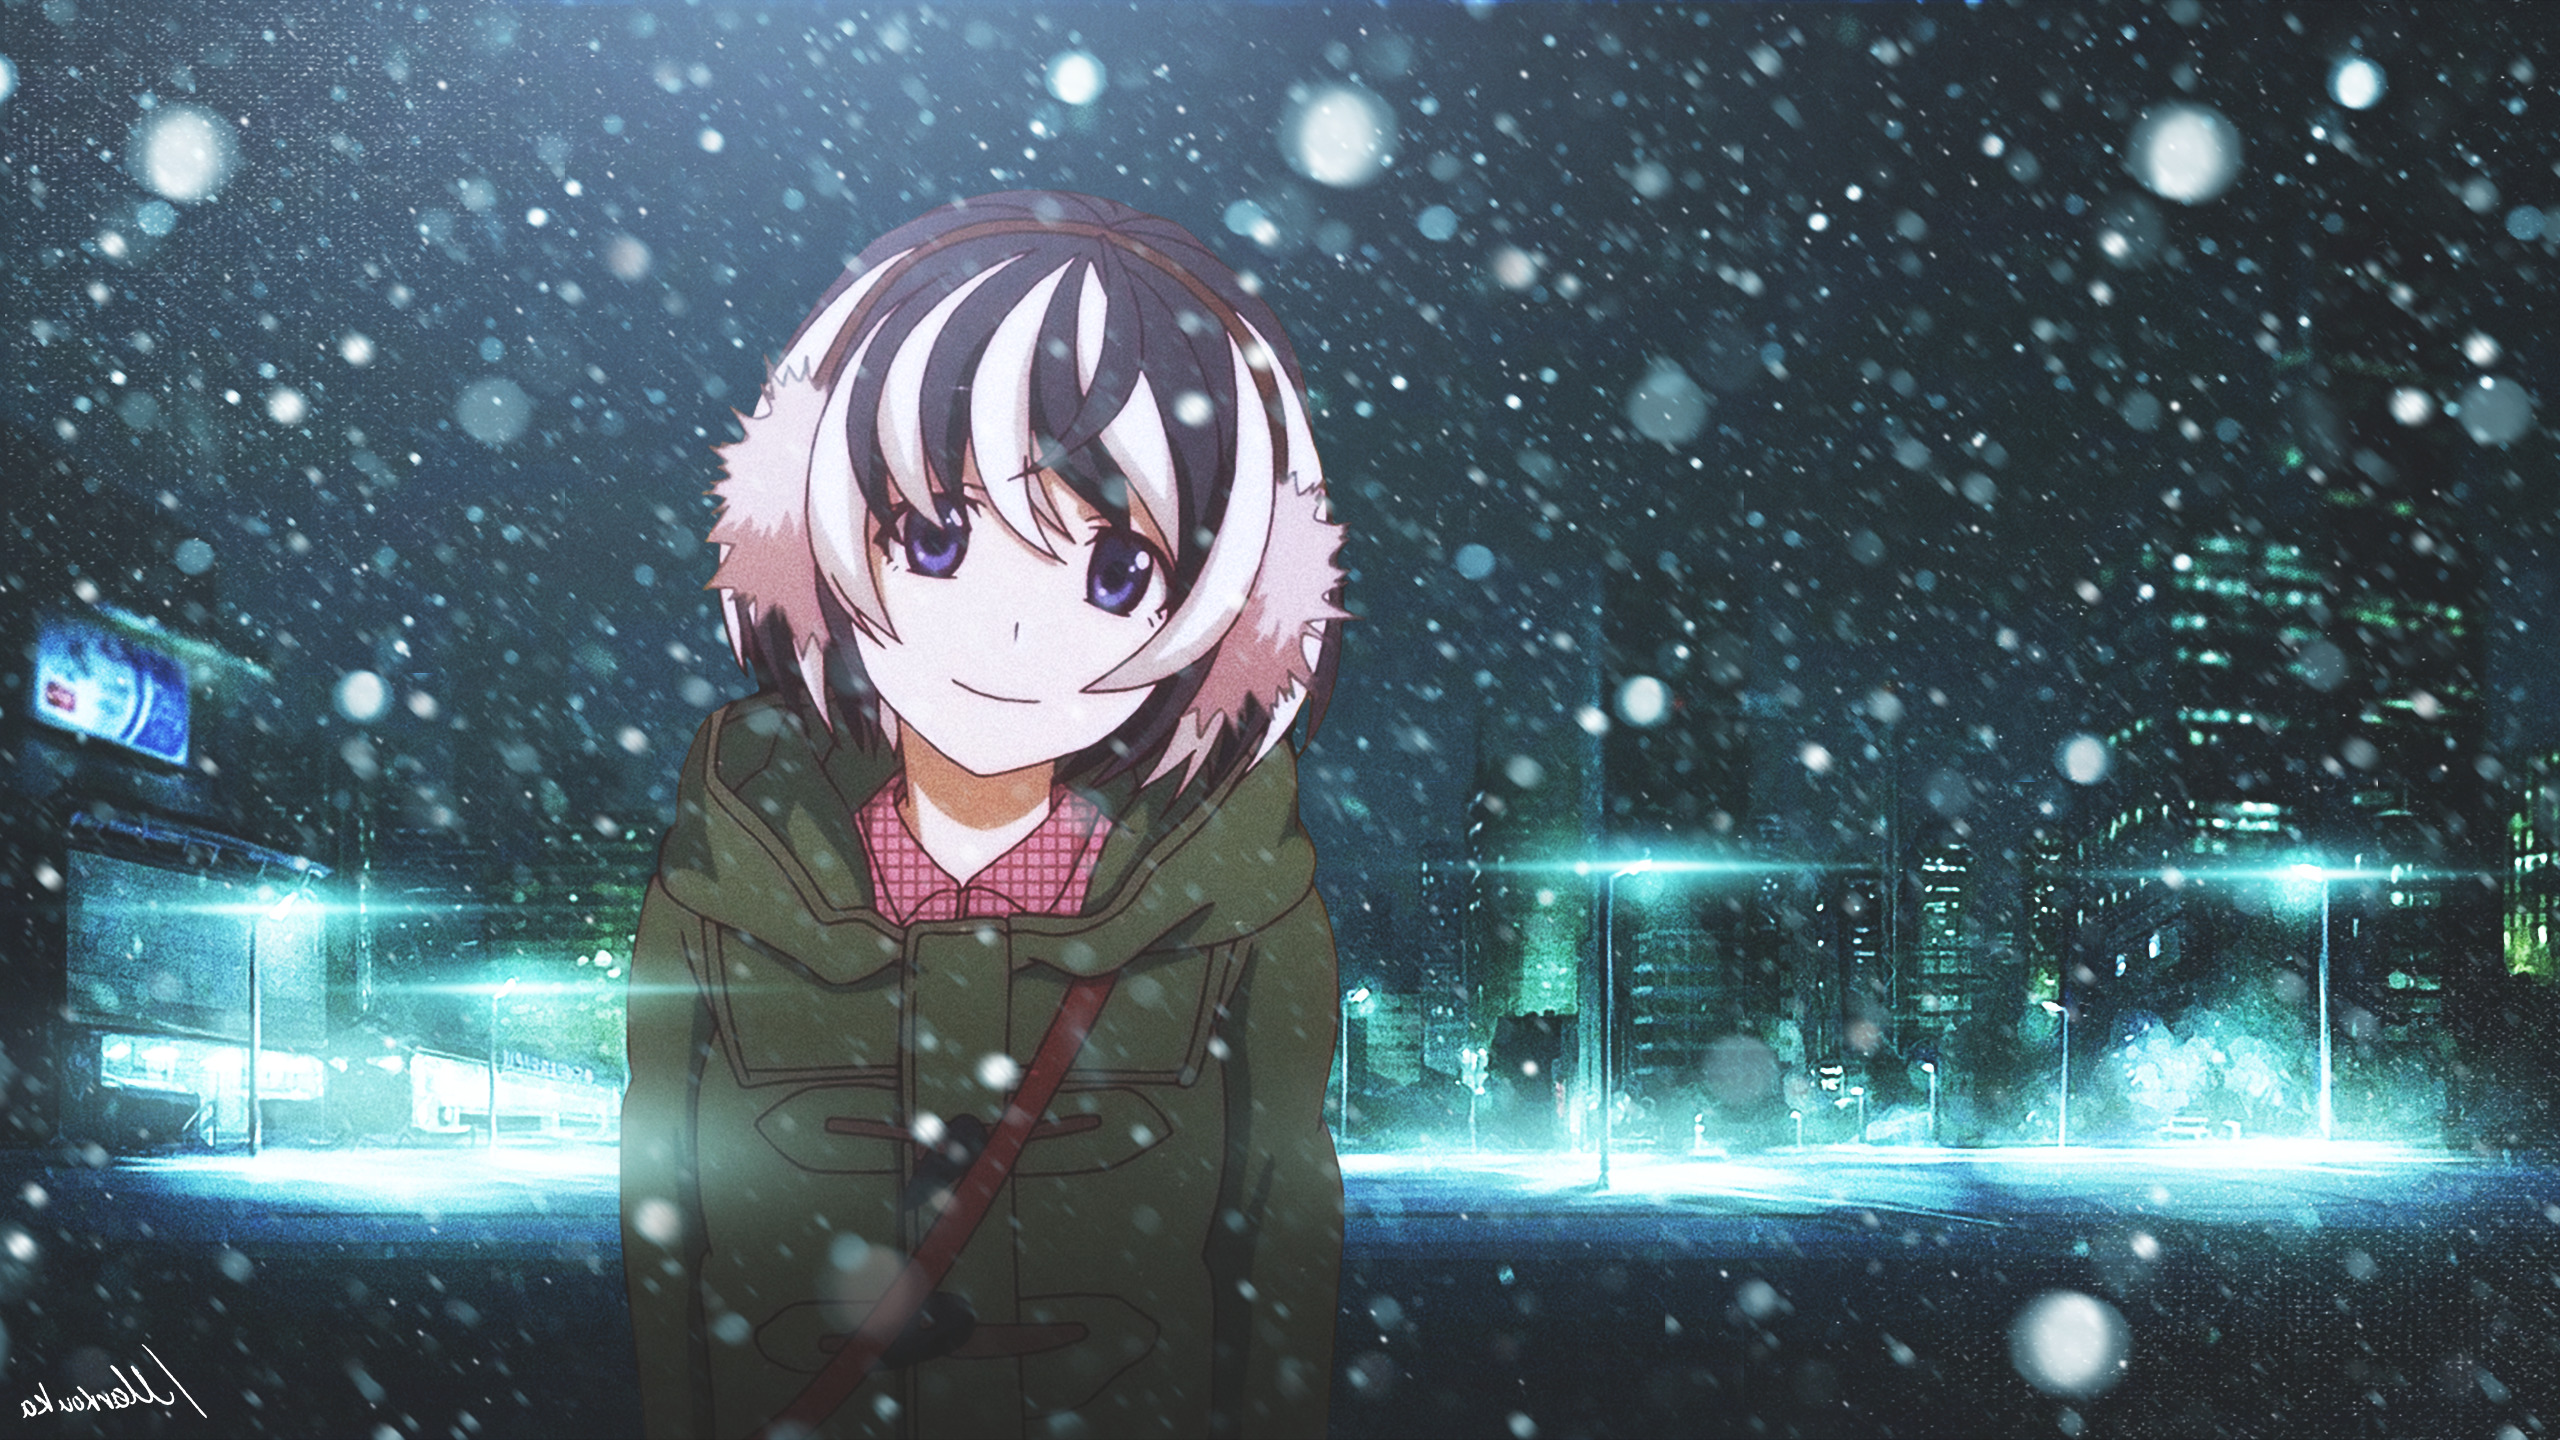 Monogatari Series, Hanekawa Tsubasa, Winter, Night, City, Snow, Anime